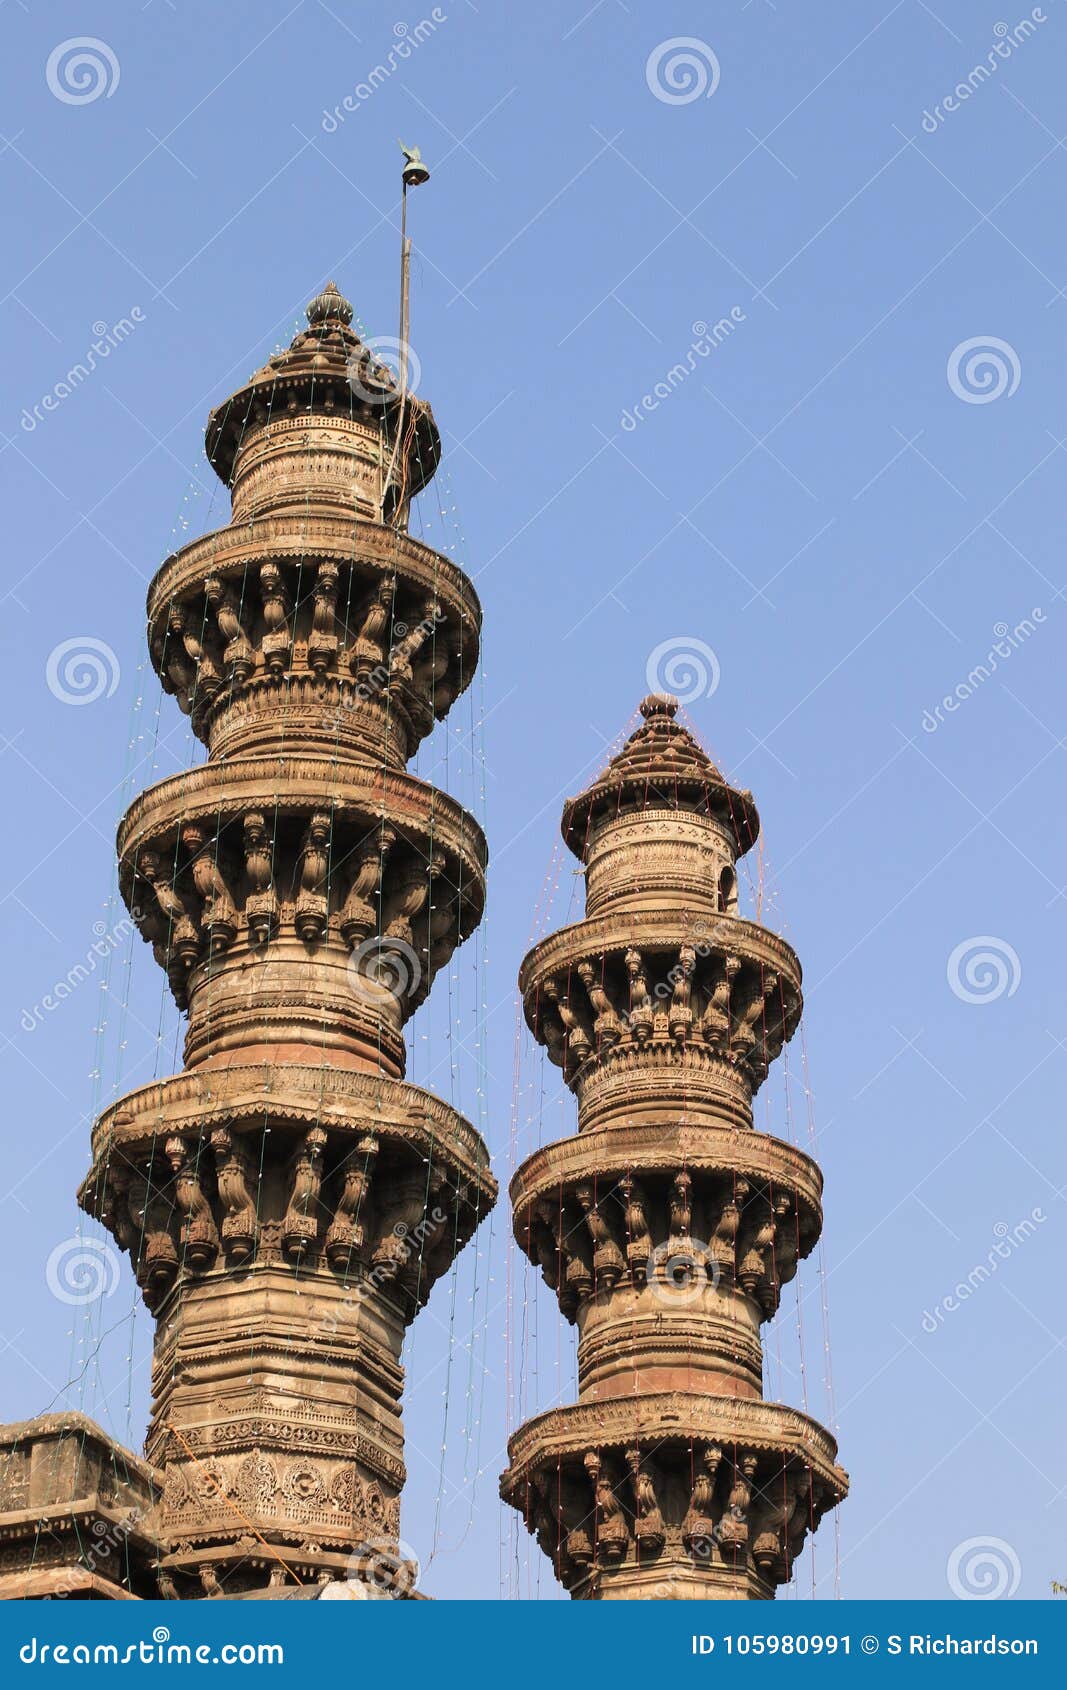 the shaking minarets close up